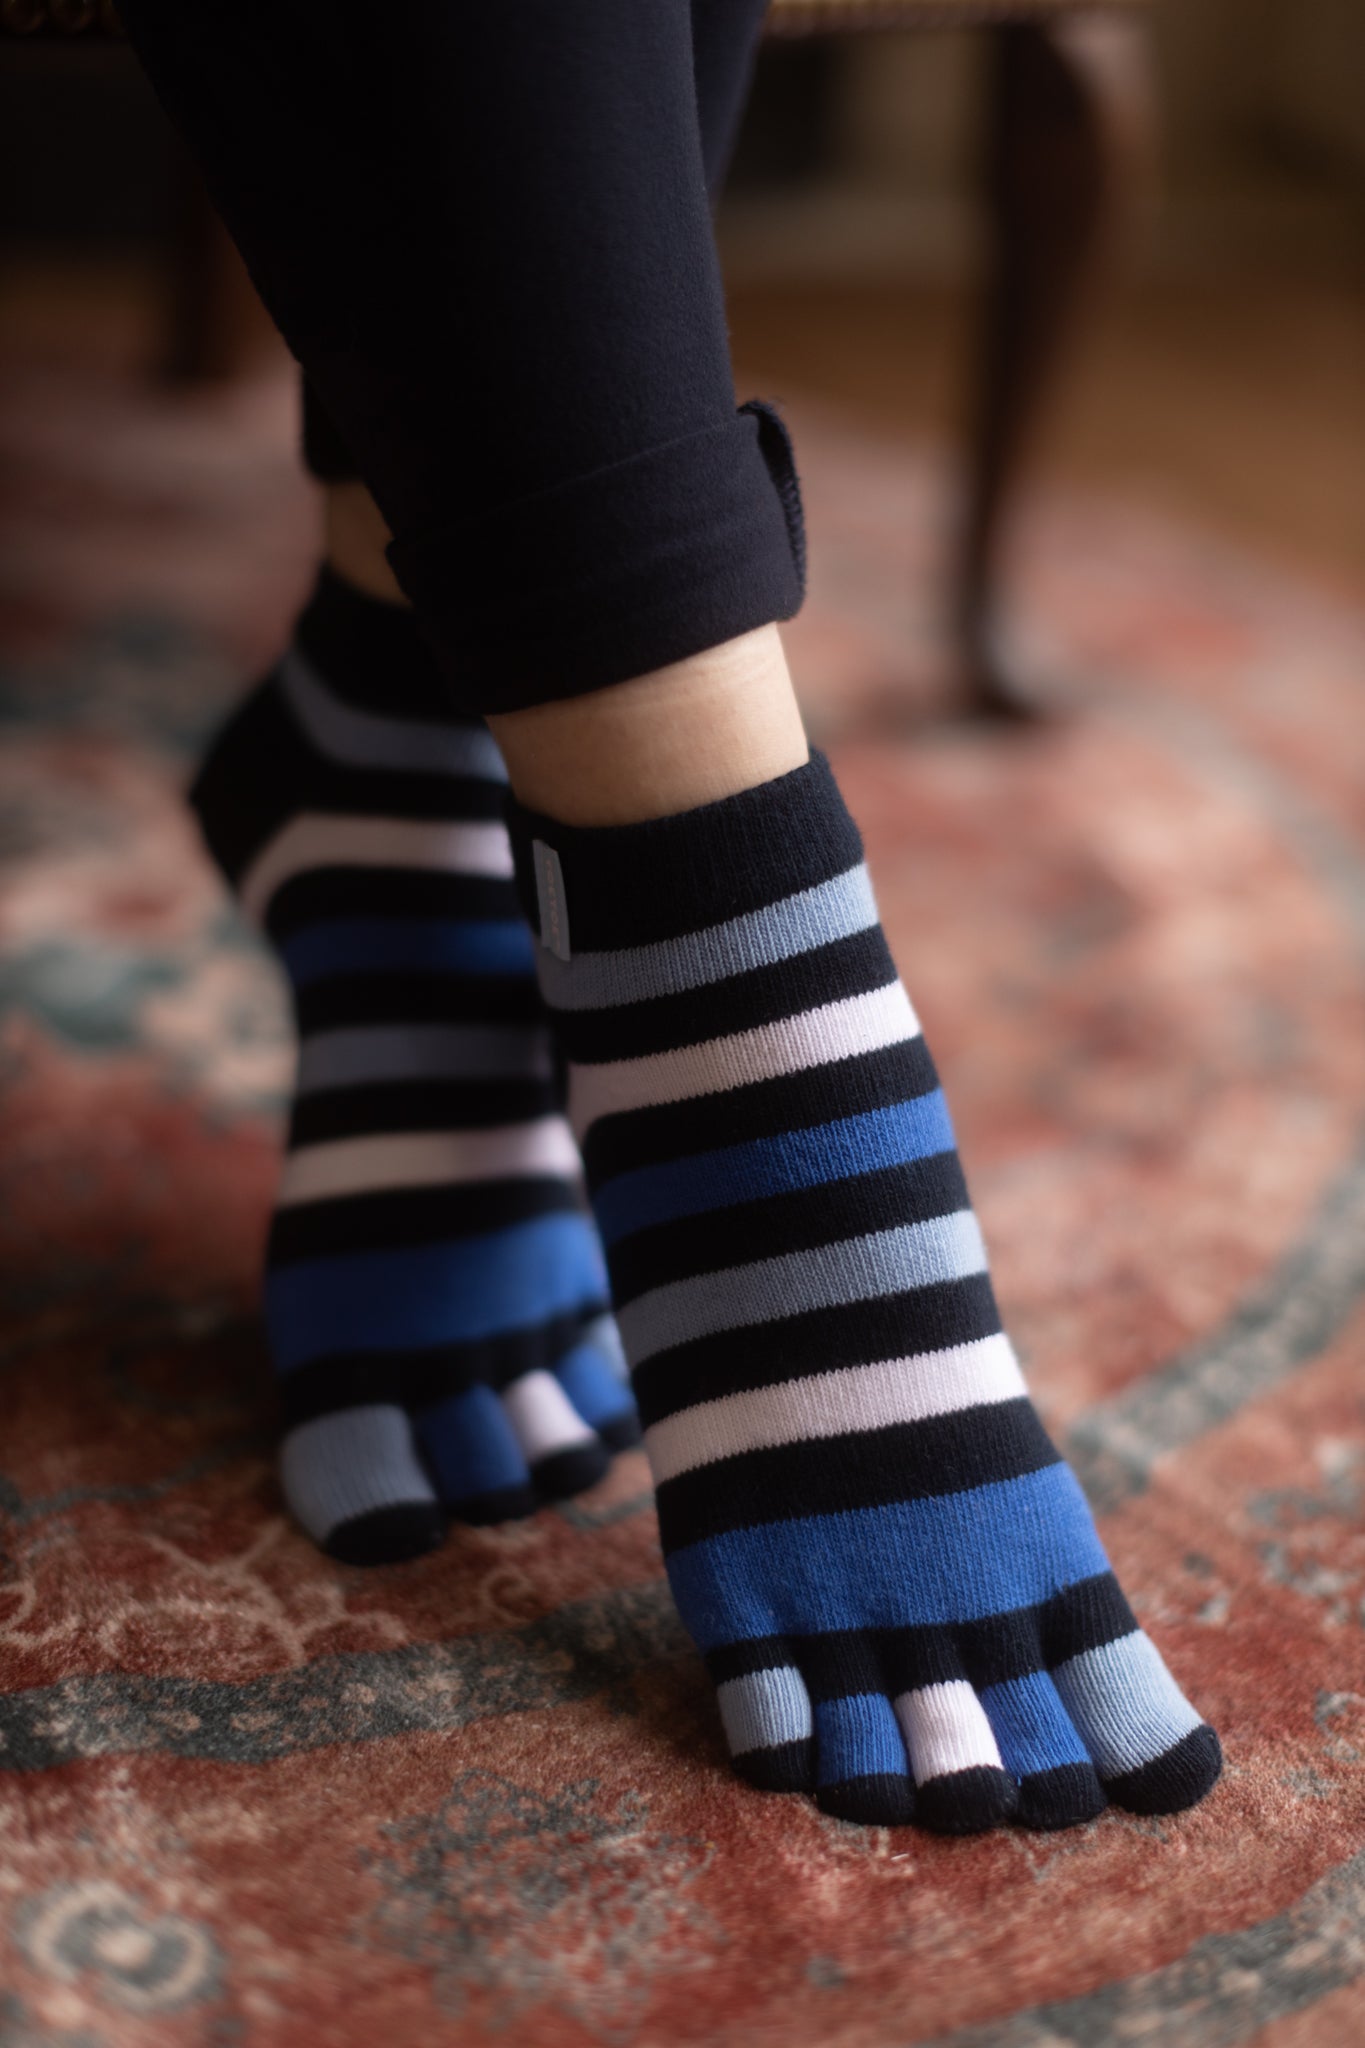 TOETOE Essential Anklet, Casual socks